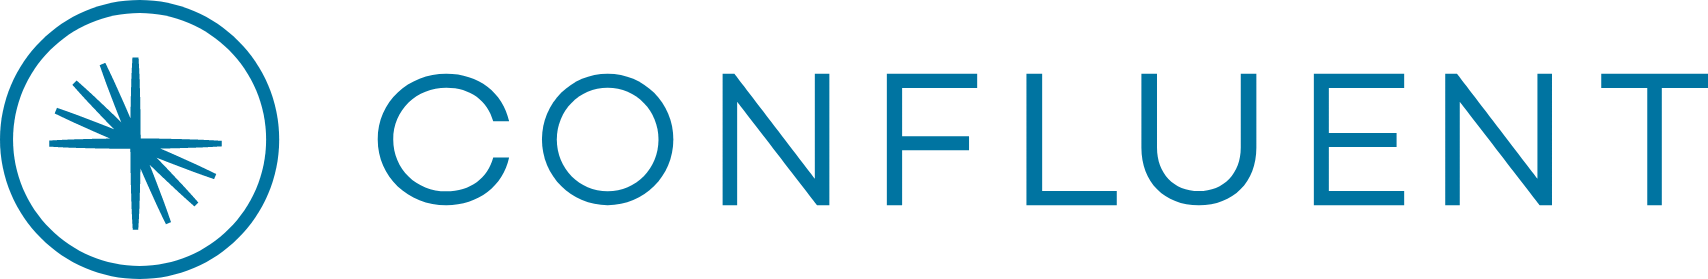 Confluent logo in transparent PNG format